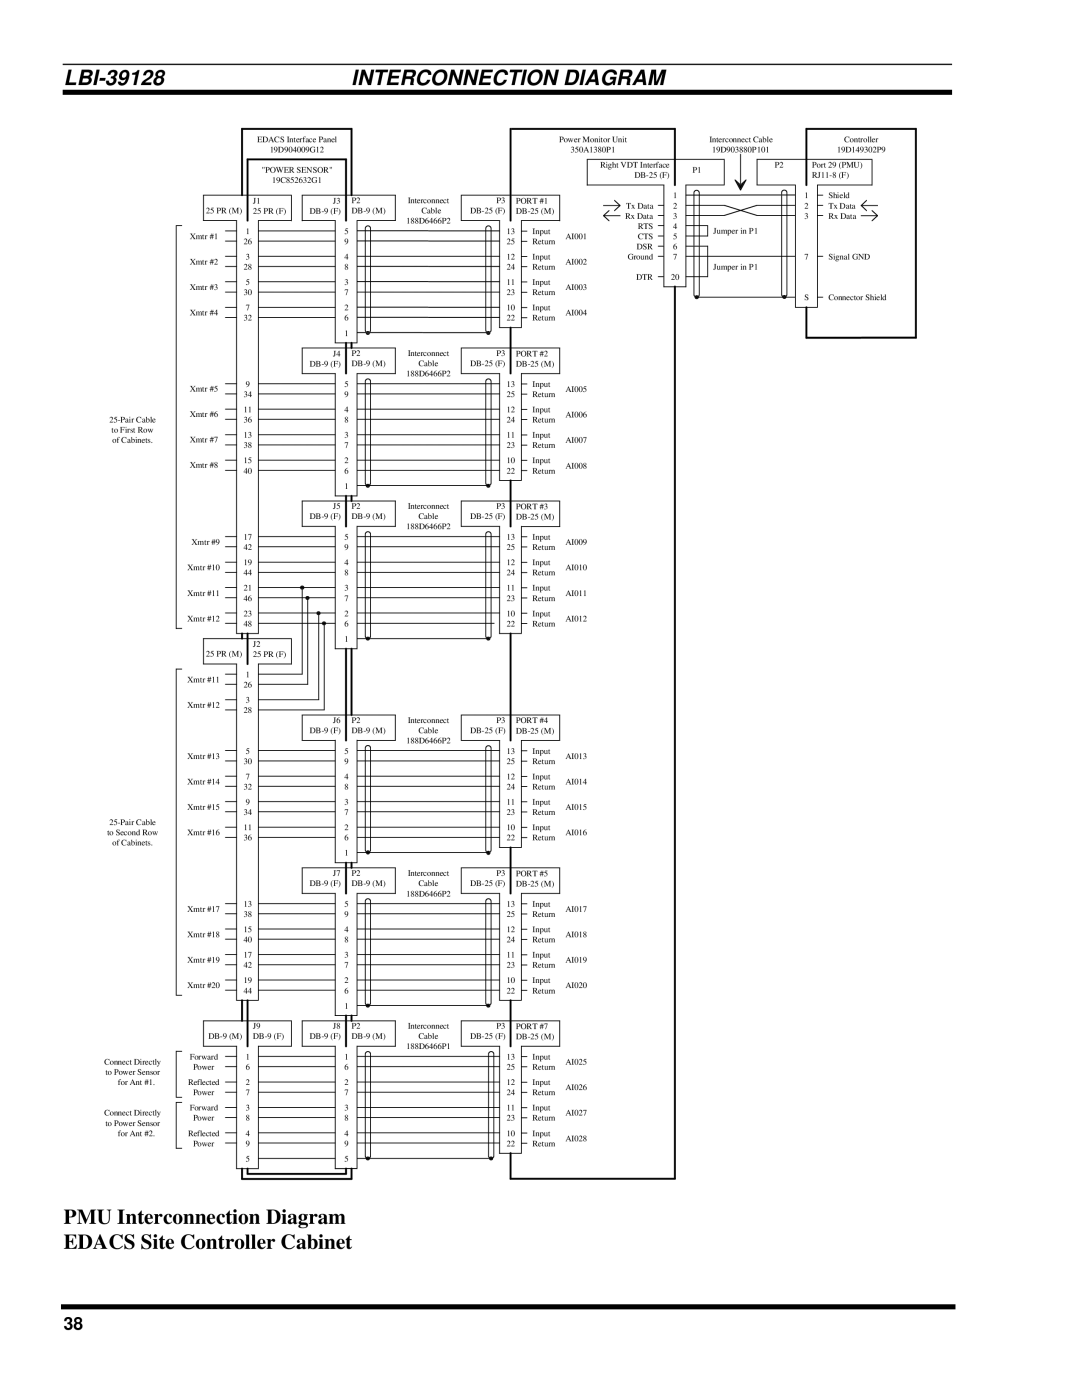 Ericsson LBI-39128 manual PMU Interconnection Diagram Edacs Site Controller Cabinet 